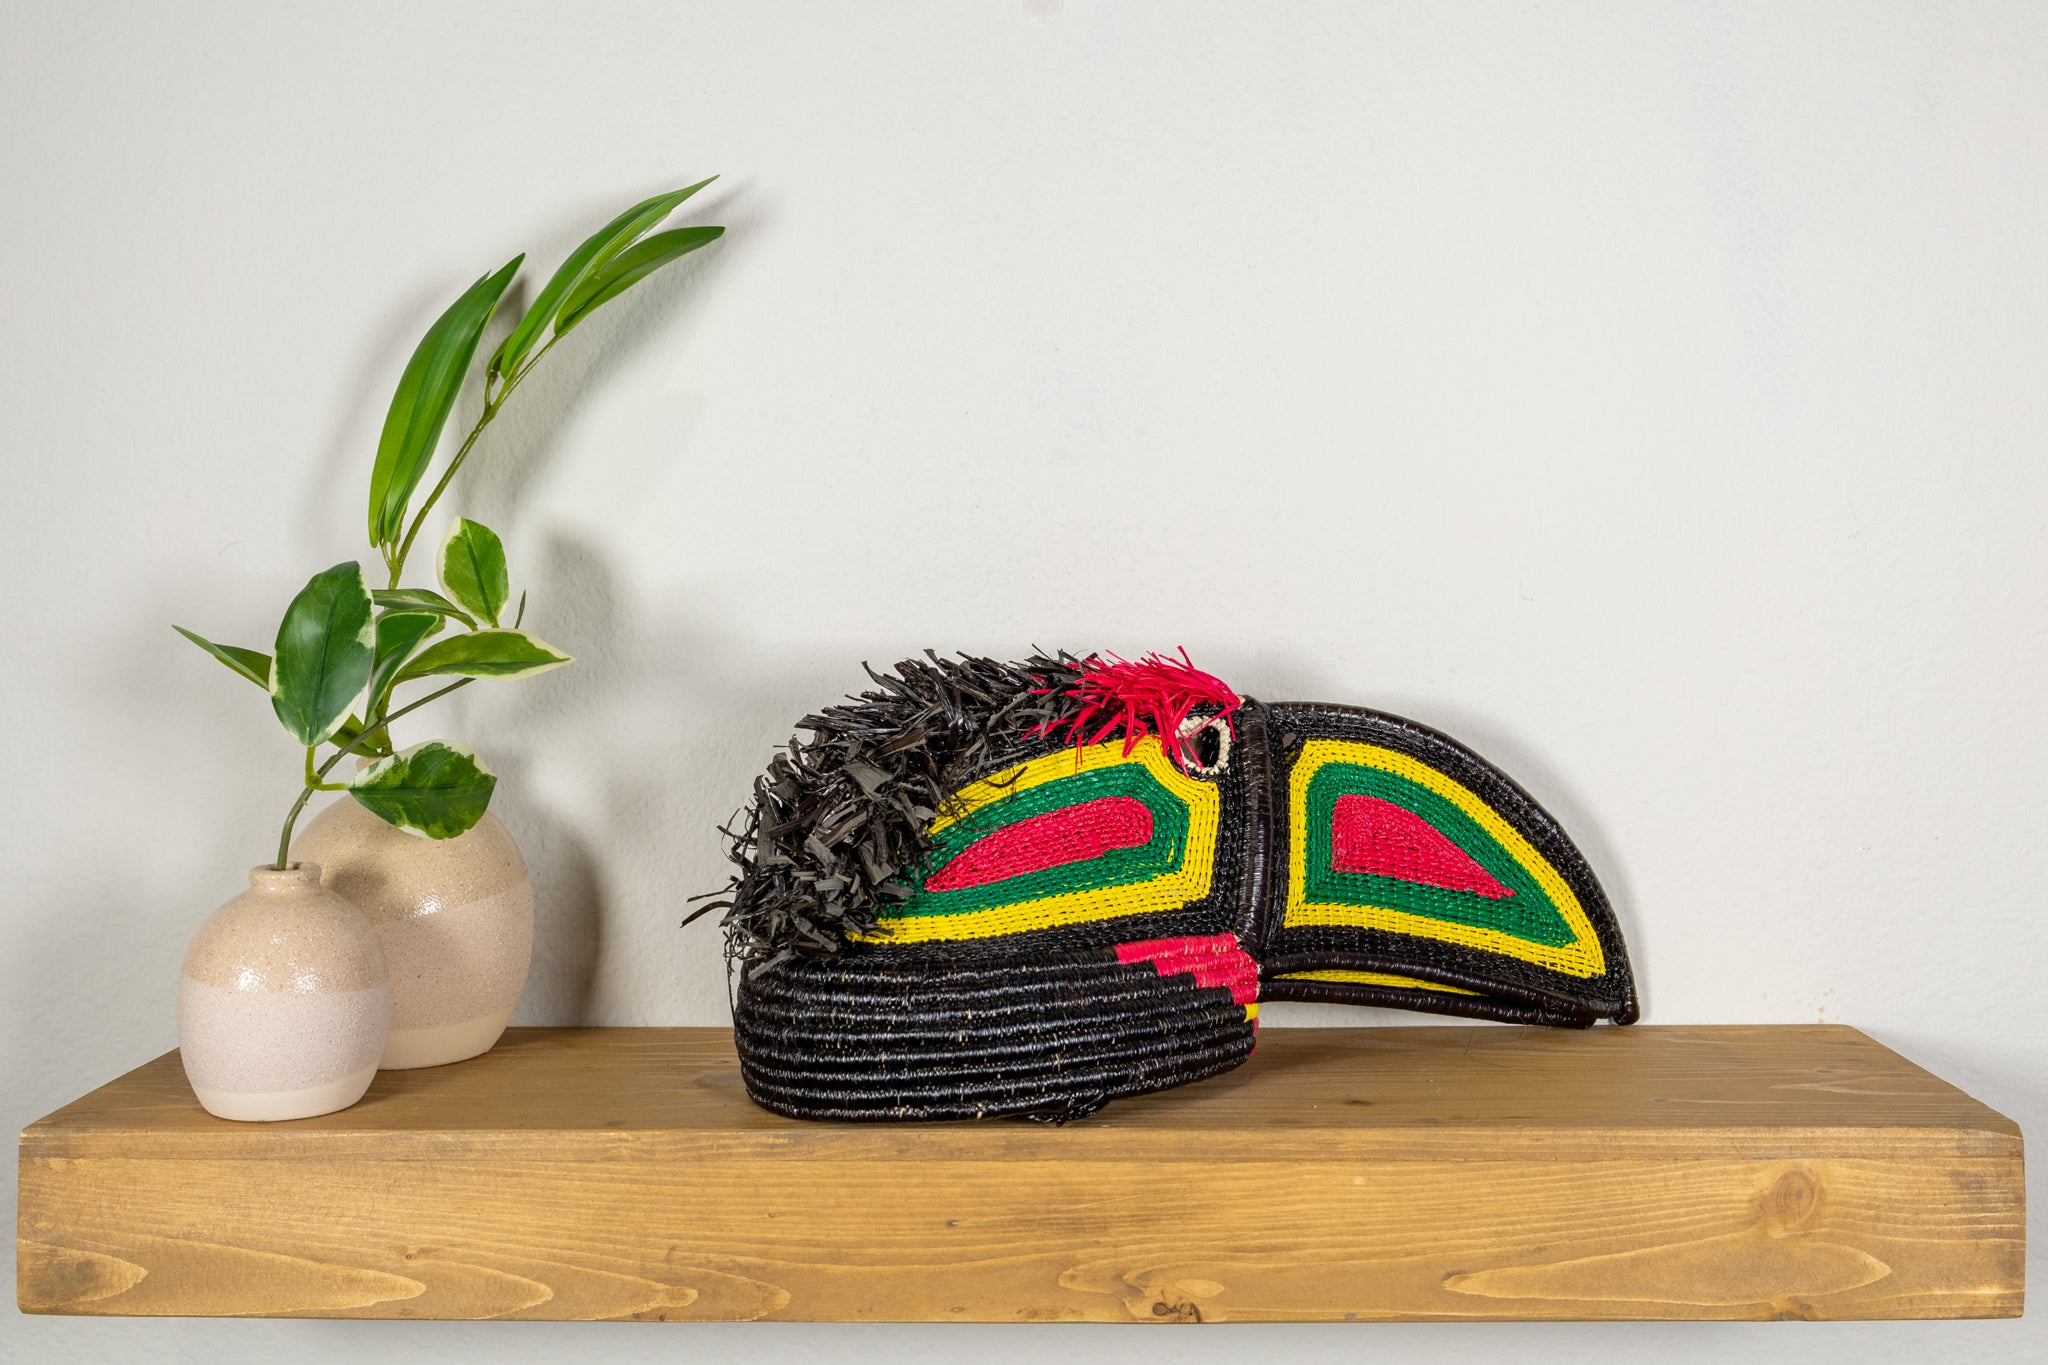 Keel-billed Toucan Mask